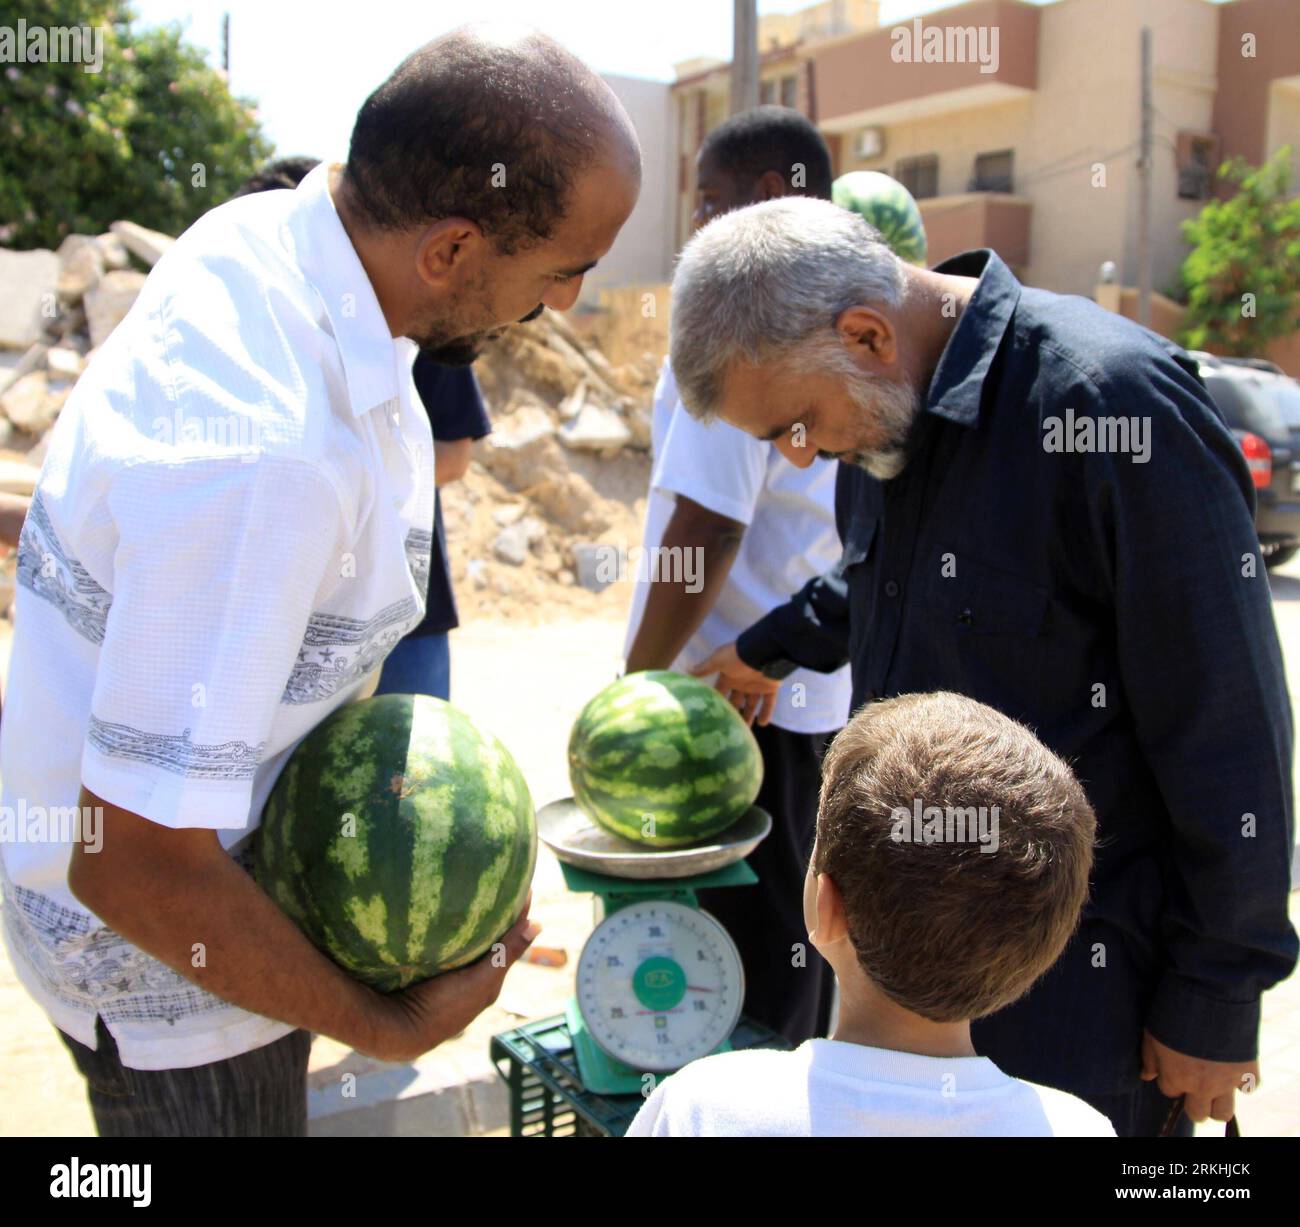 Bildnummer: 55836715  Datum: 28.08.2011  Copyright: imago/Xinhua (110828) -- TRIPOLI, Aug. 28, 2011 (Xinhua) -- Libyan men buy watermelons in Tripoli, Libya, August 28, 2011. (Xinhua/Hamza Turkia) (lyi) LIBYA-TRIPOLI-LIFE PUBLICATIONxNOTxINxCHN Gesellschaft Food Wassermelonen Melonen xjh x0x premiumd 2011 quadrat     Bildnummer 55836715 Date 28 08 2011 Copyright Imago XINHUA  Tripoli Aug 28 2011 XINHUA Libyan Men Buy Watermelons in Tripoli Libya August 28 2011 XINHUA Hamza Turkia lyi Libya Tripoli Life PUBLICATIONxNOTxINxCHN Society Food Watermelons Melons XJH x0x premiumd 2011 Square Stock Photo